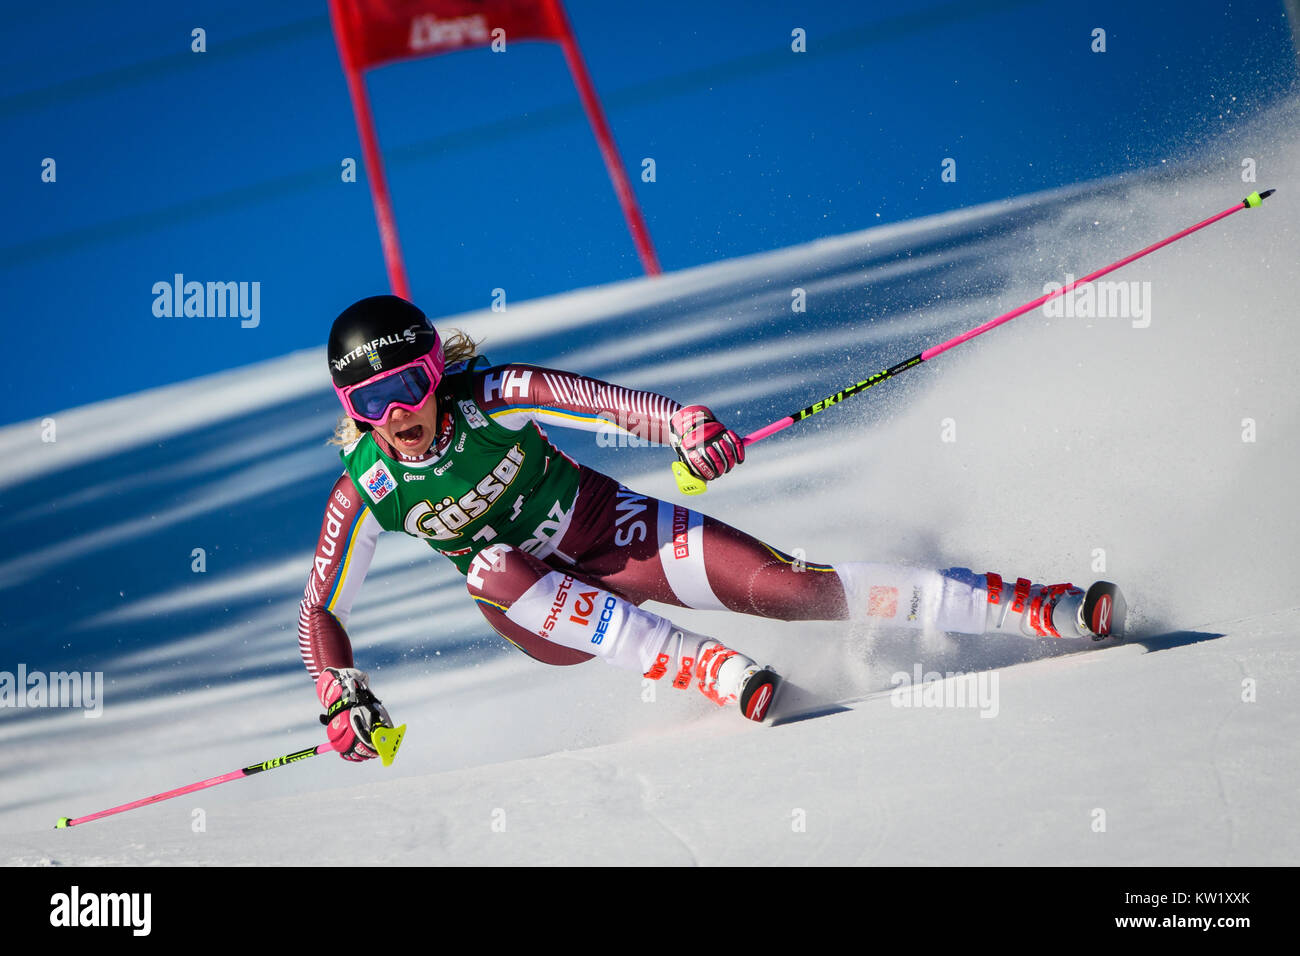 Lienz, Austria. 29 dic, 2017. Frida Hansdotter de Suecia compite durante la Copa del Mundo FIS Damas Slalom Gigante carrera en Lienz, Austria el 29 de diciembre de 2017. Crédito: Jure Makovec/Alamy Live News Foto de stock